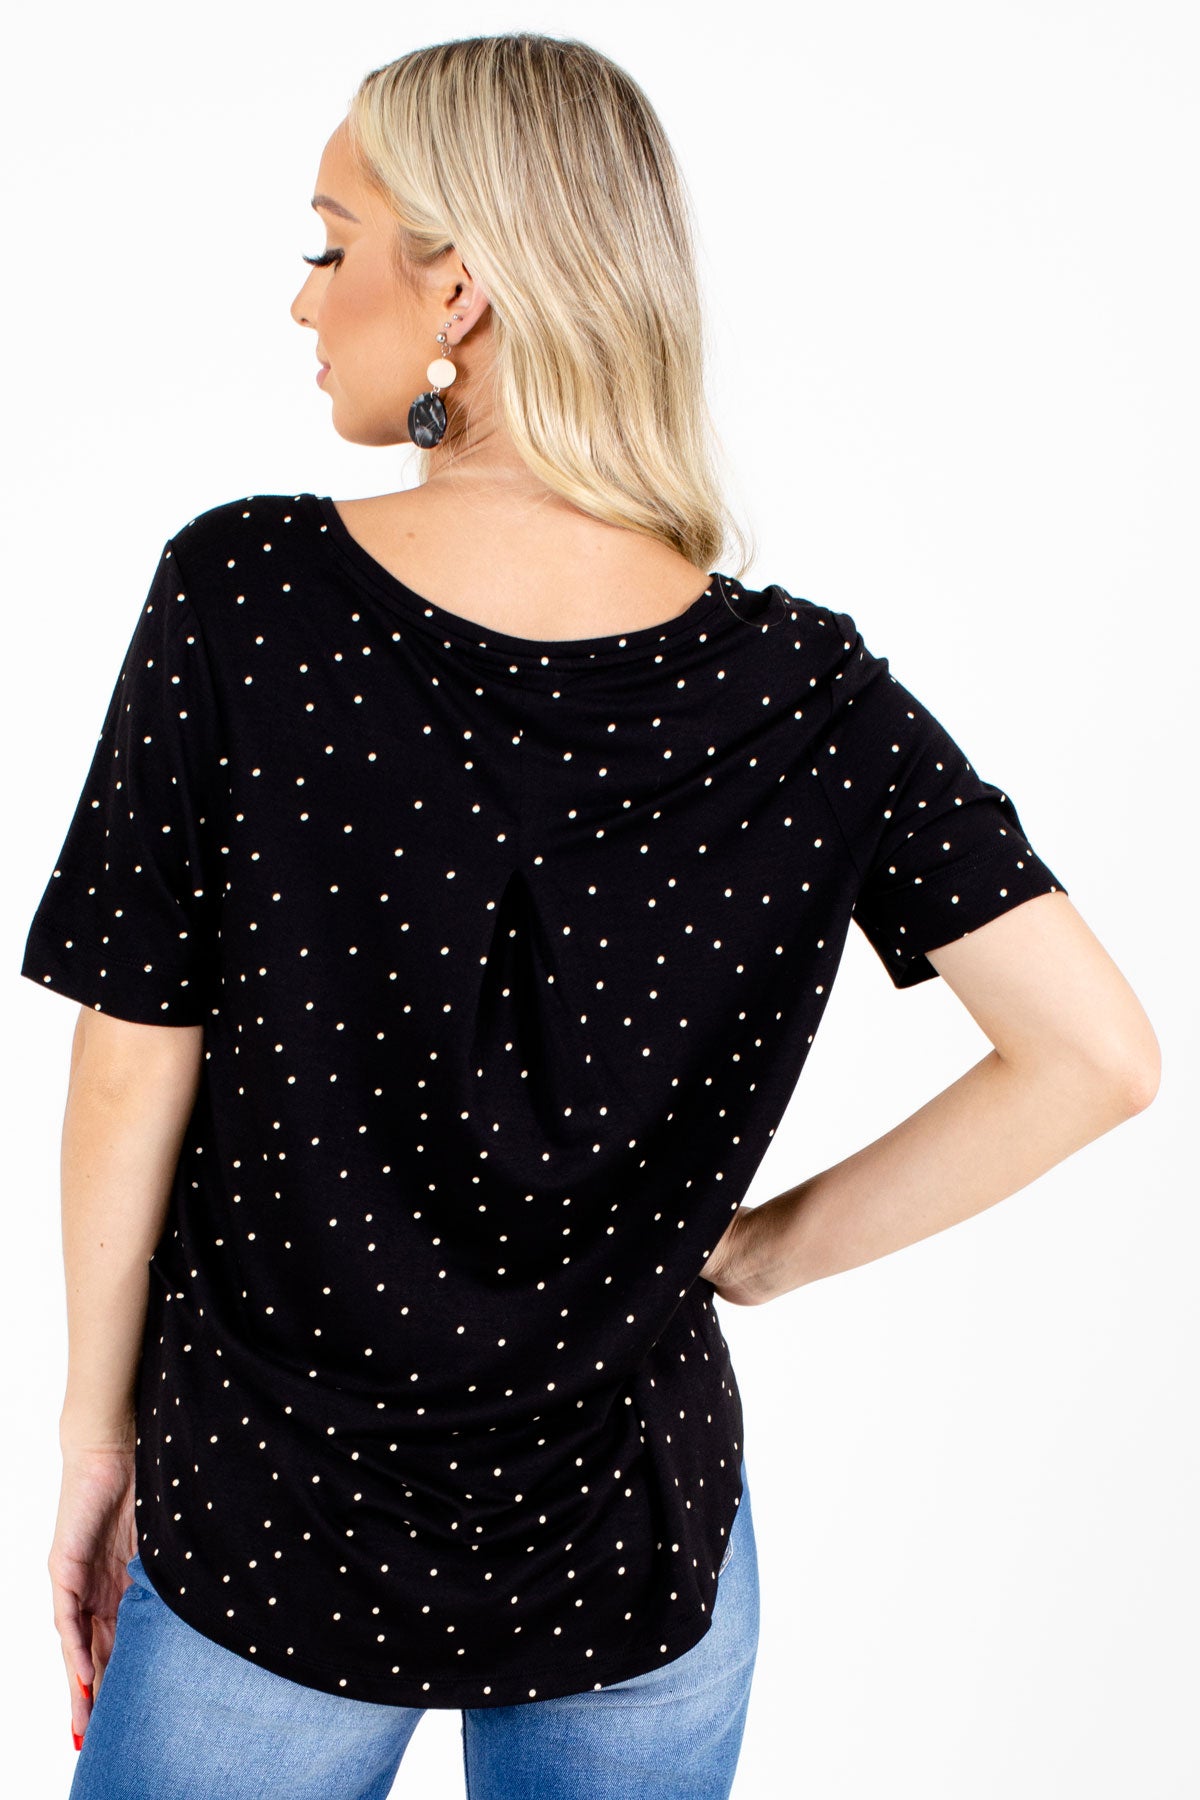 Black Polka Dot Patterned Boutique Tops for Women